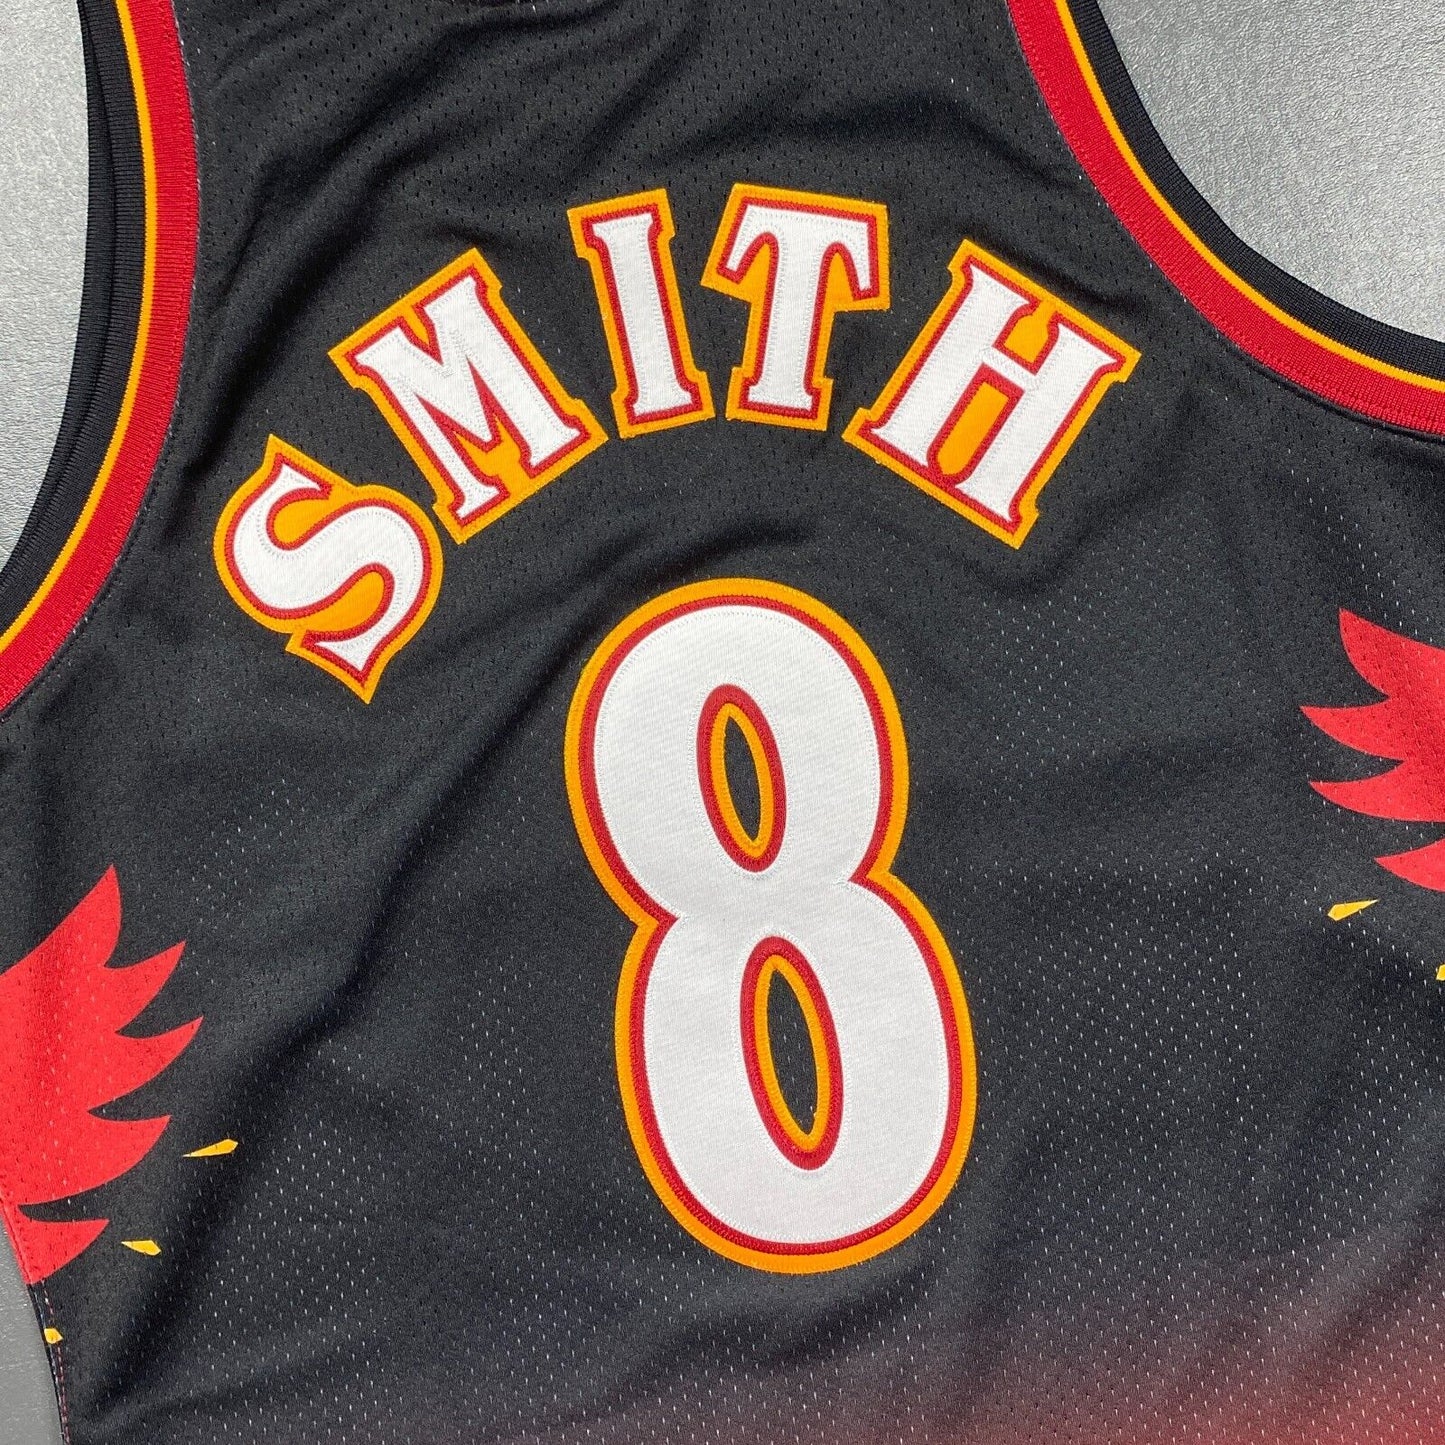 100% Authentic Steve Smith Mitchell & Ness 96 97 Atlanta Hawks Jersey Size 40 M